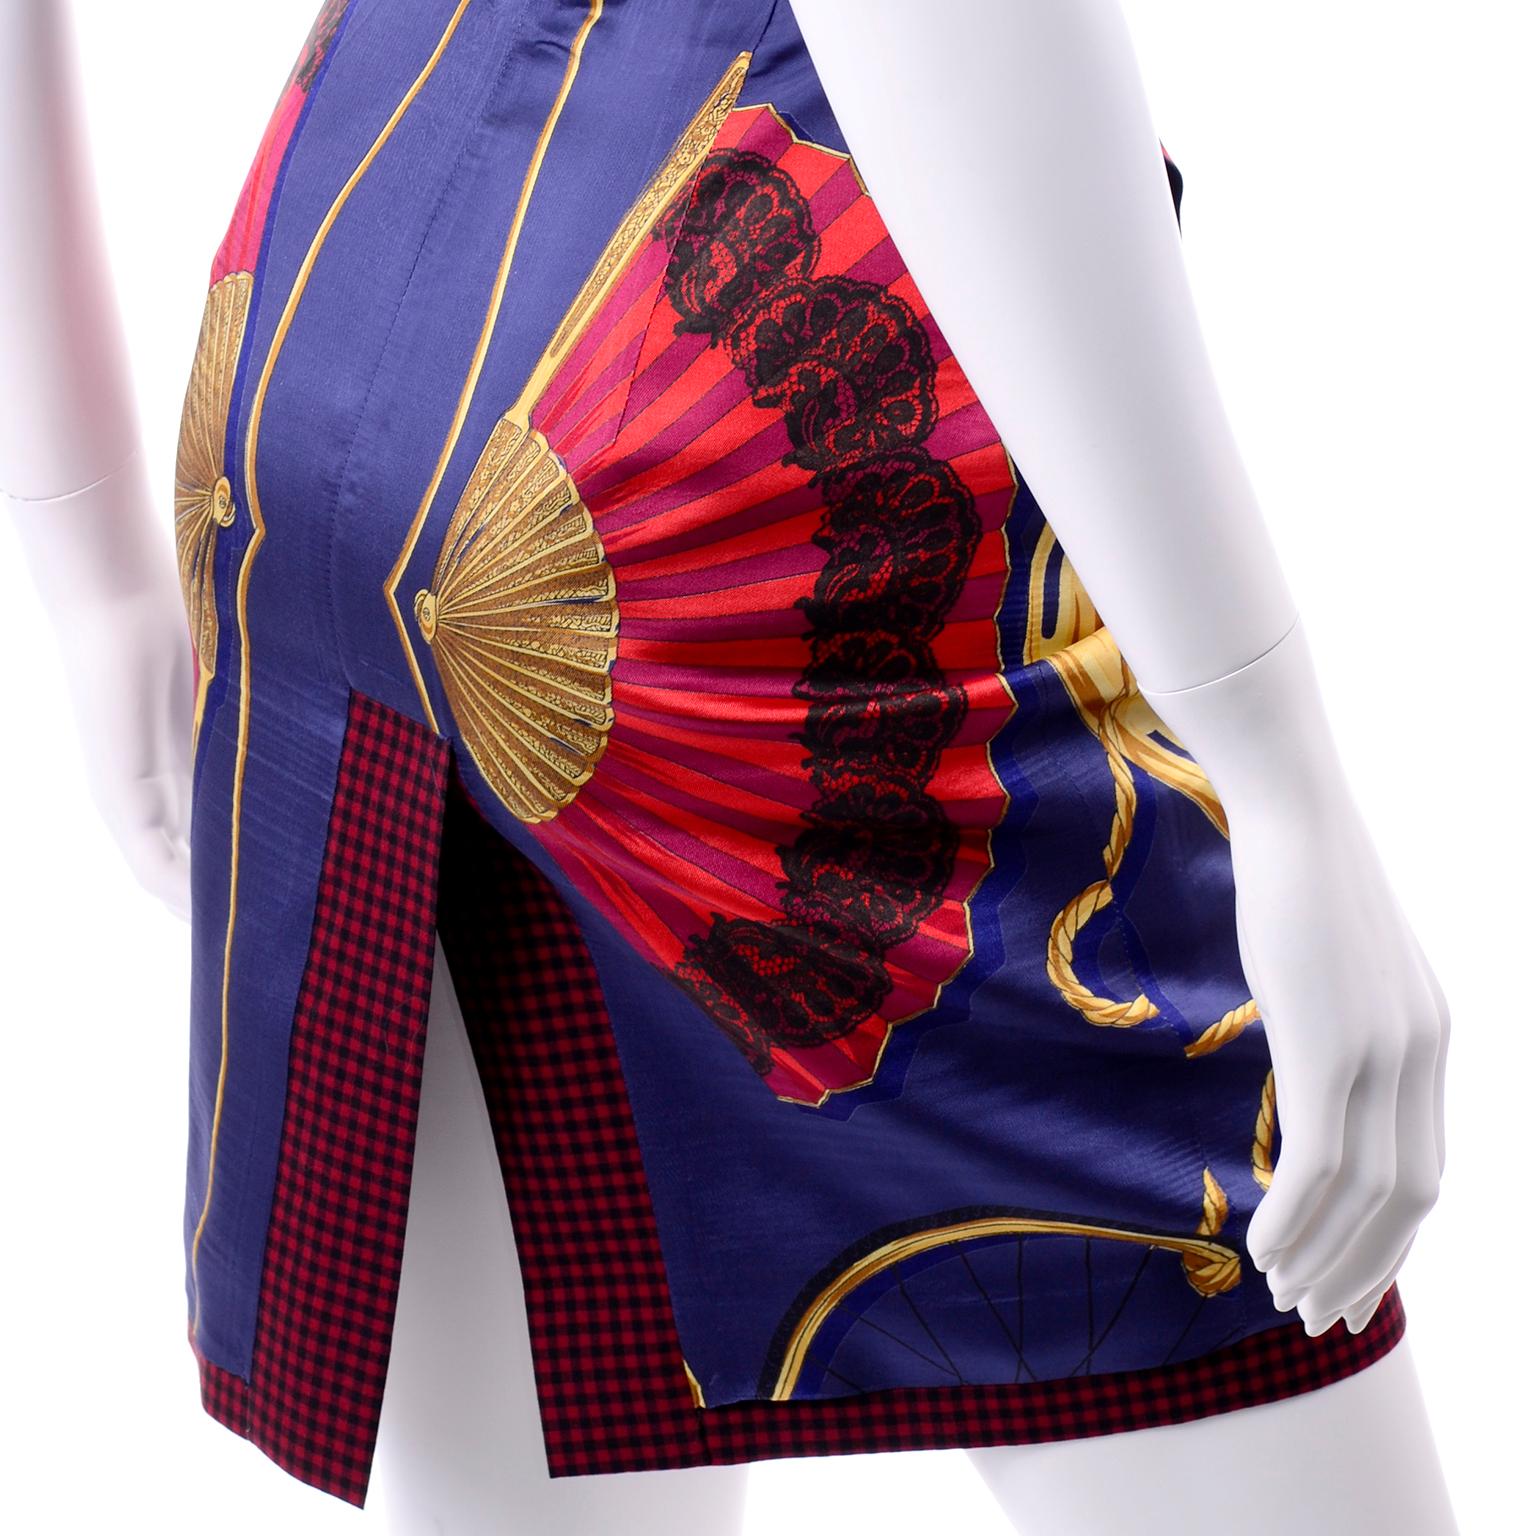 Vintage Franco Moschino Pret a Porter Nautical Print Skirt w/ Fans & Vines 4